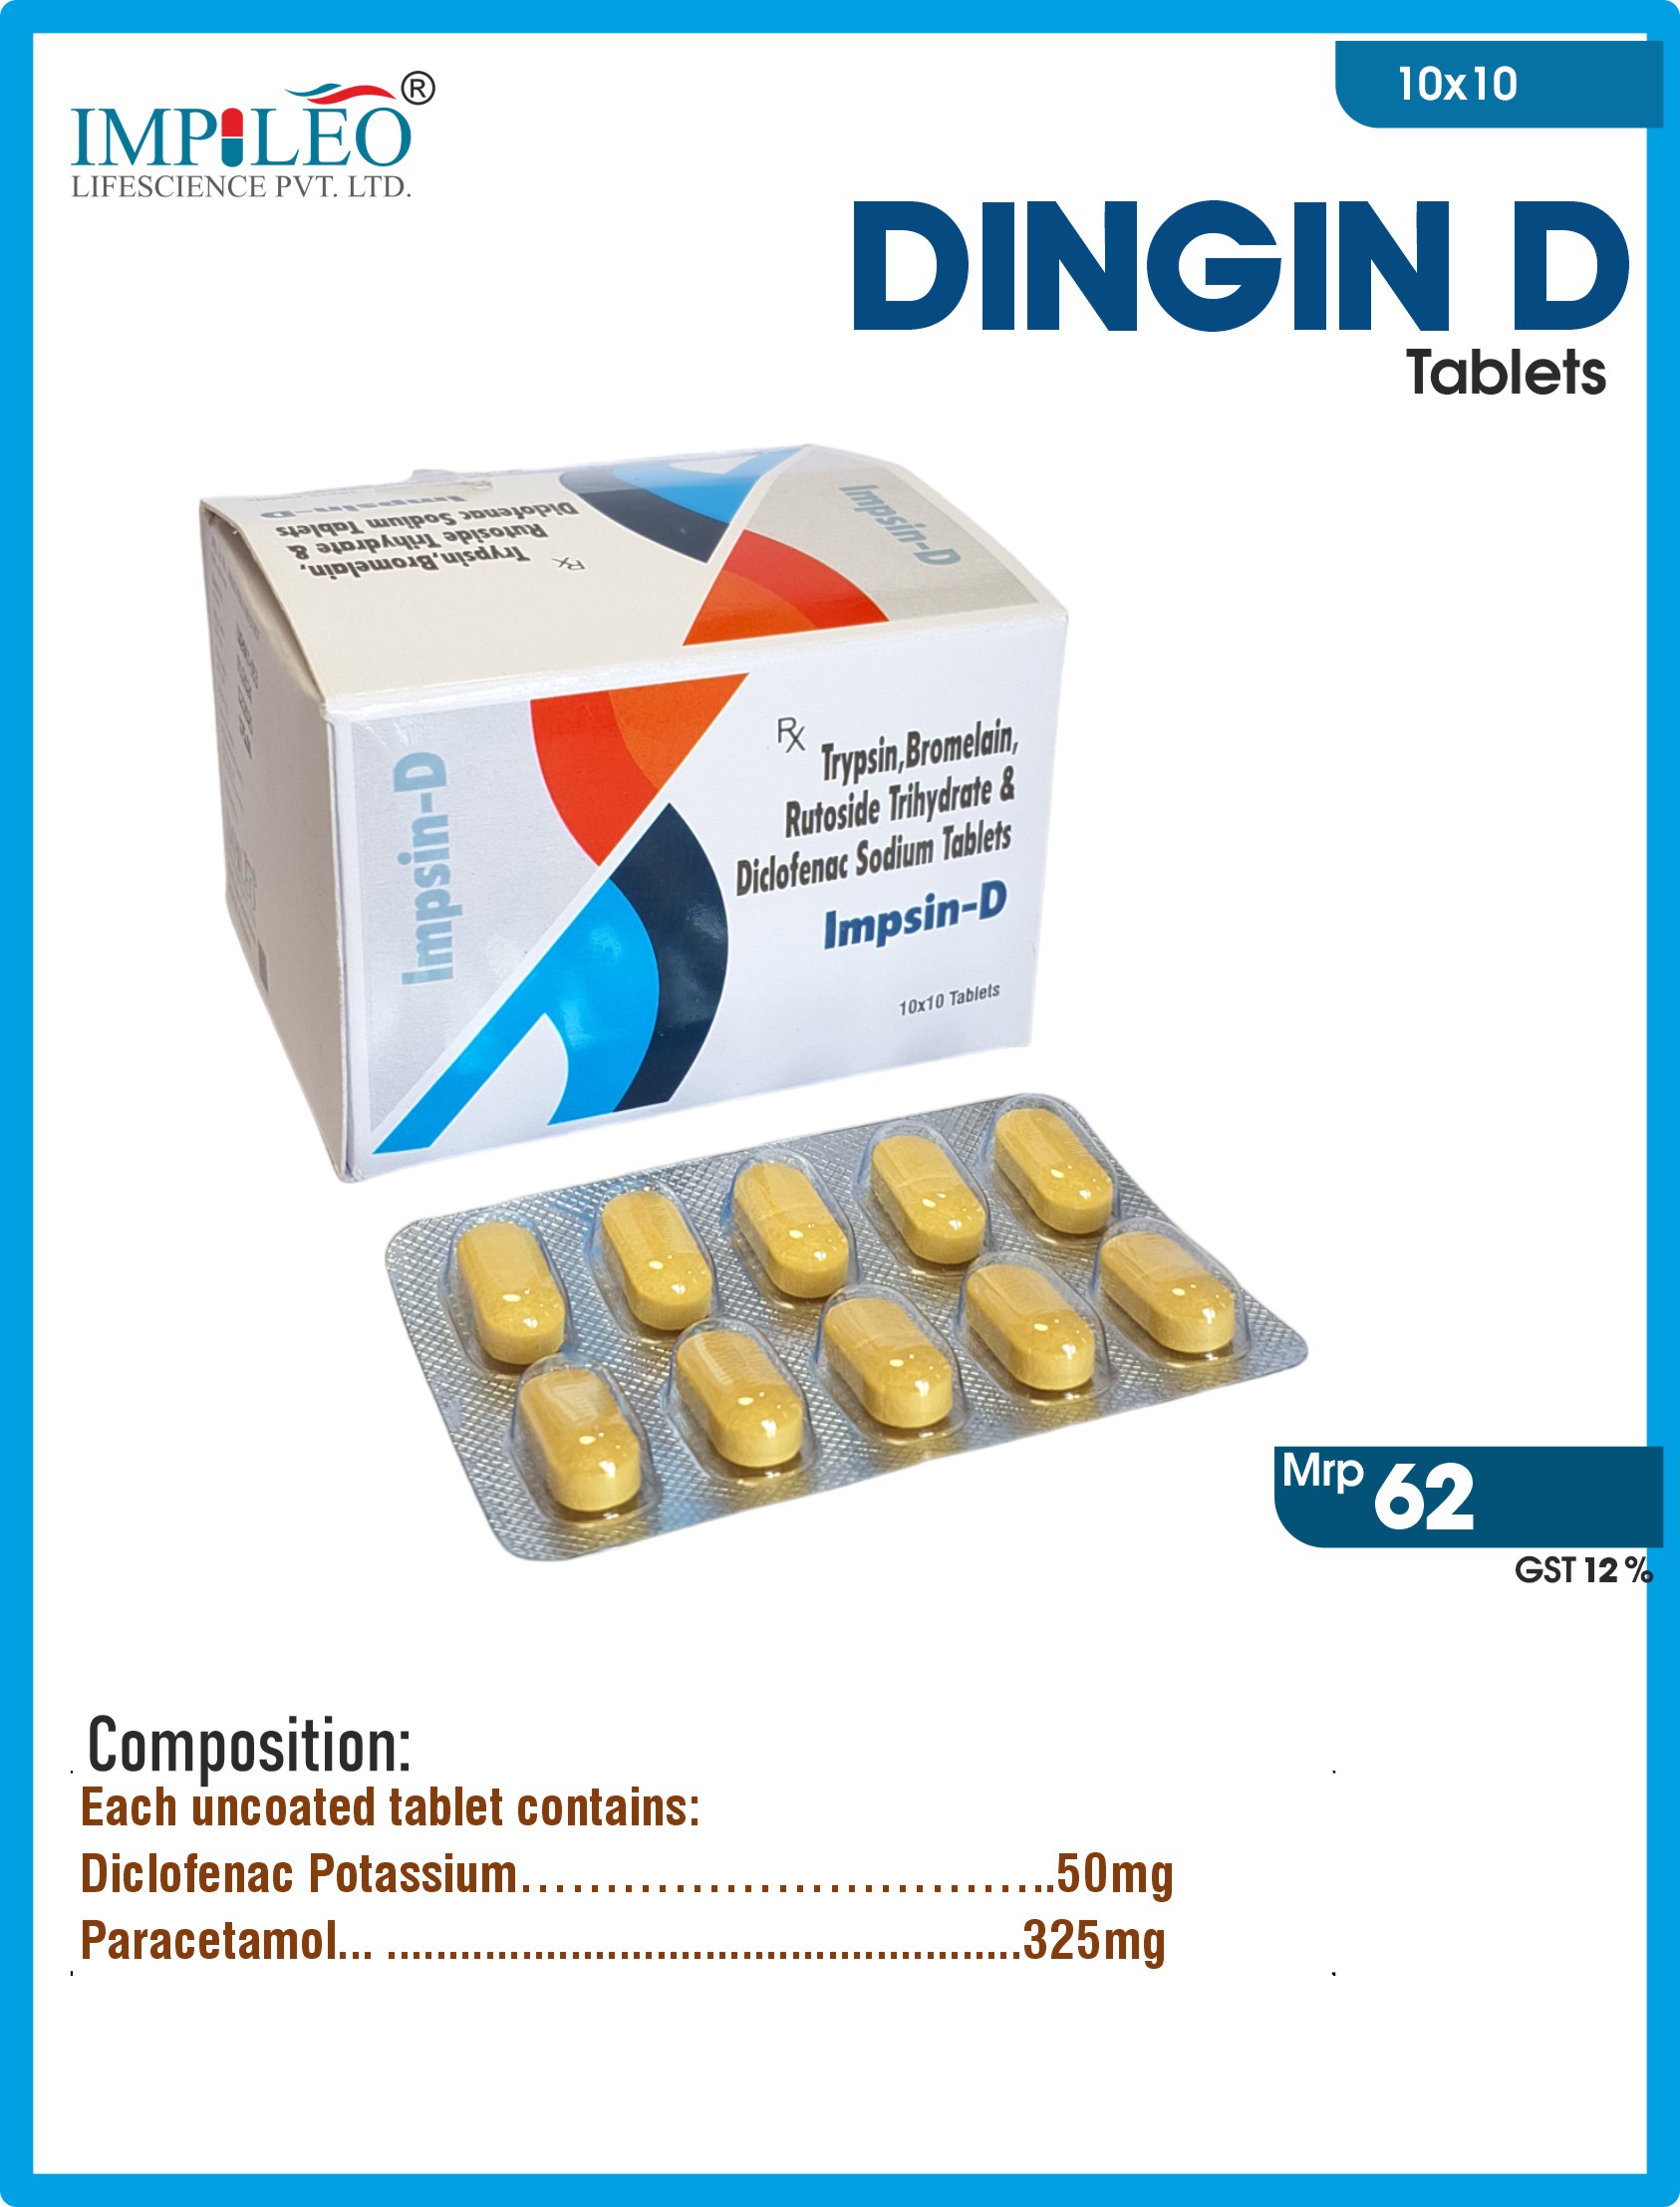 Peak Wellness Unveiled : Premium DINGIN-D ™ (Diclofenac Potassium & Paracetamol) Tablets by Top Third-Party Manufacturing in Baddi 